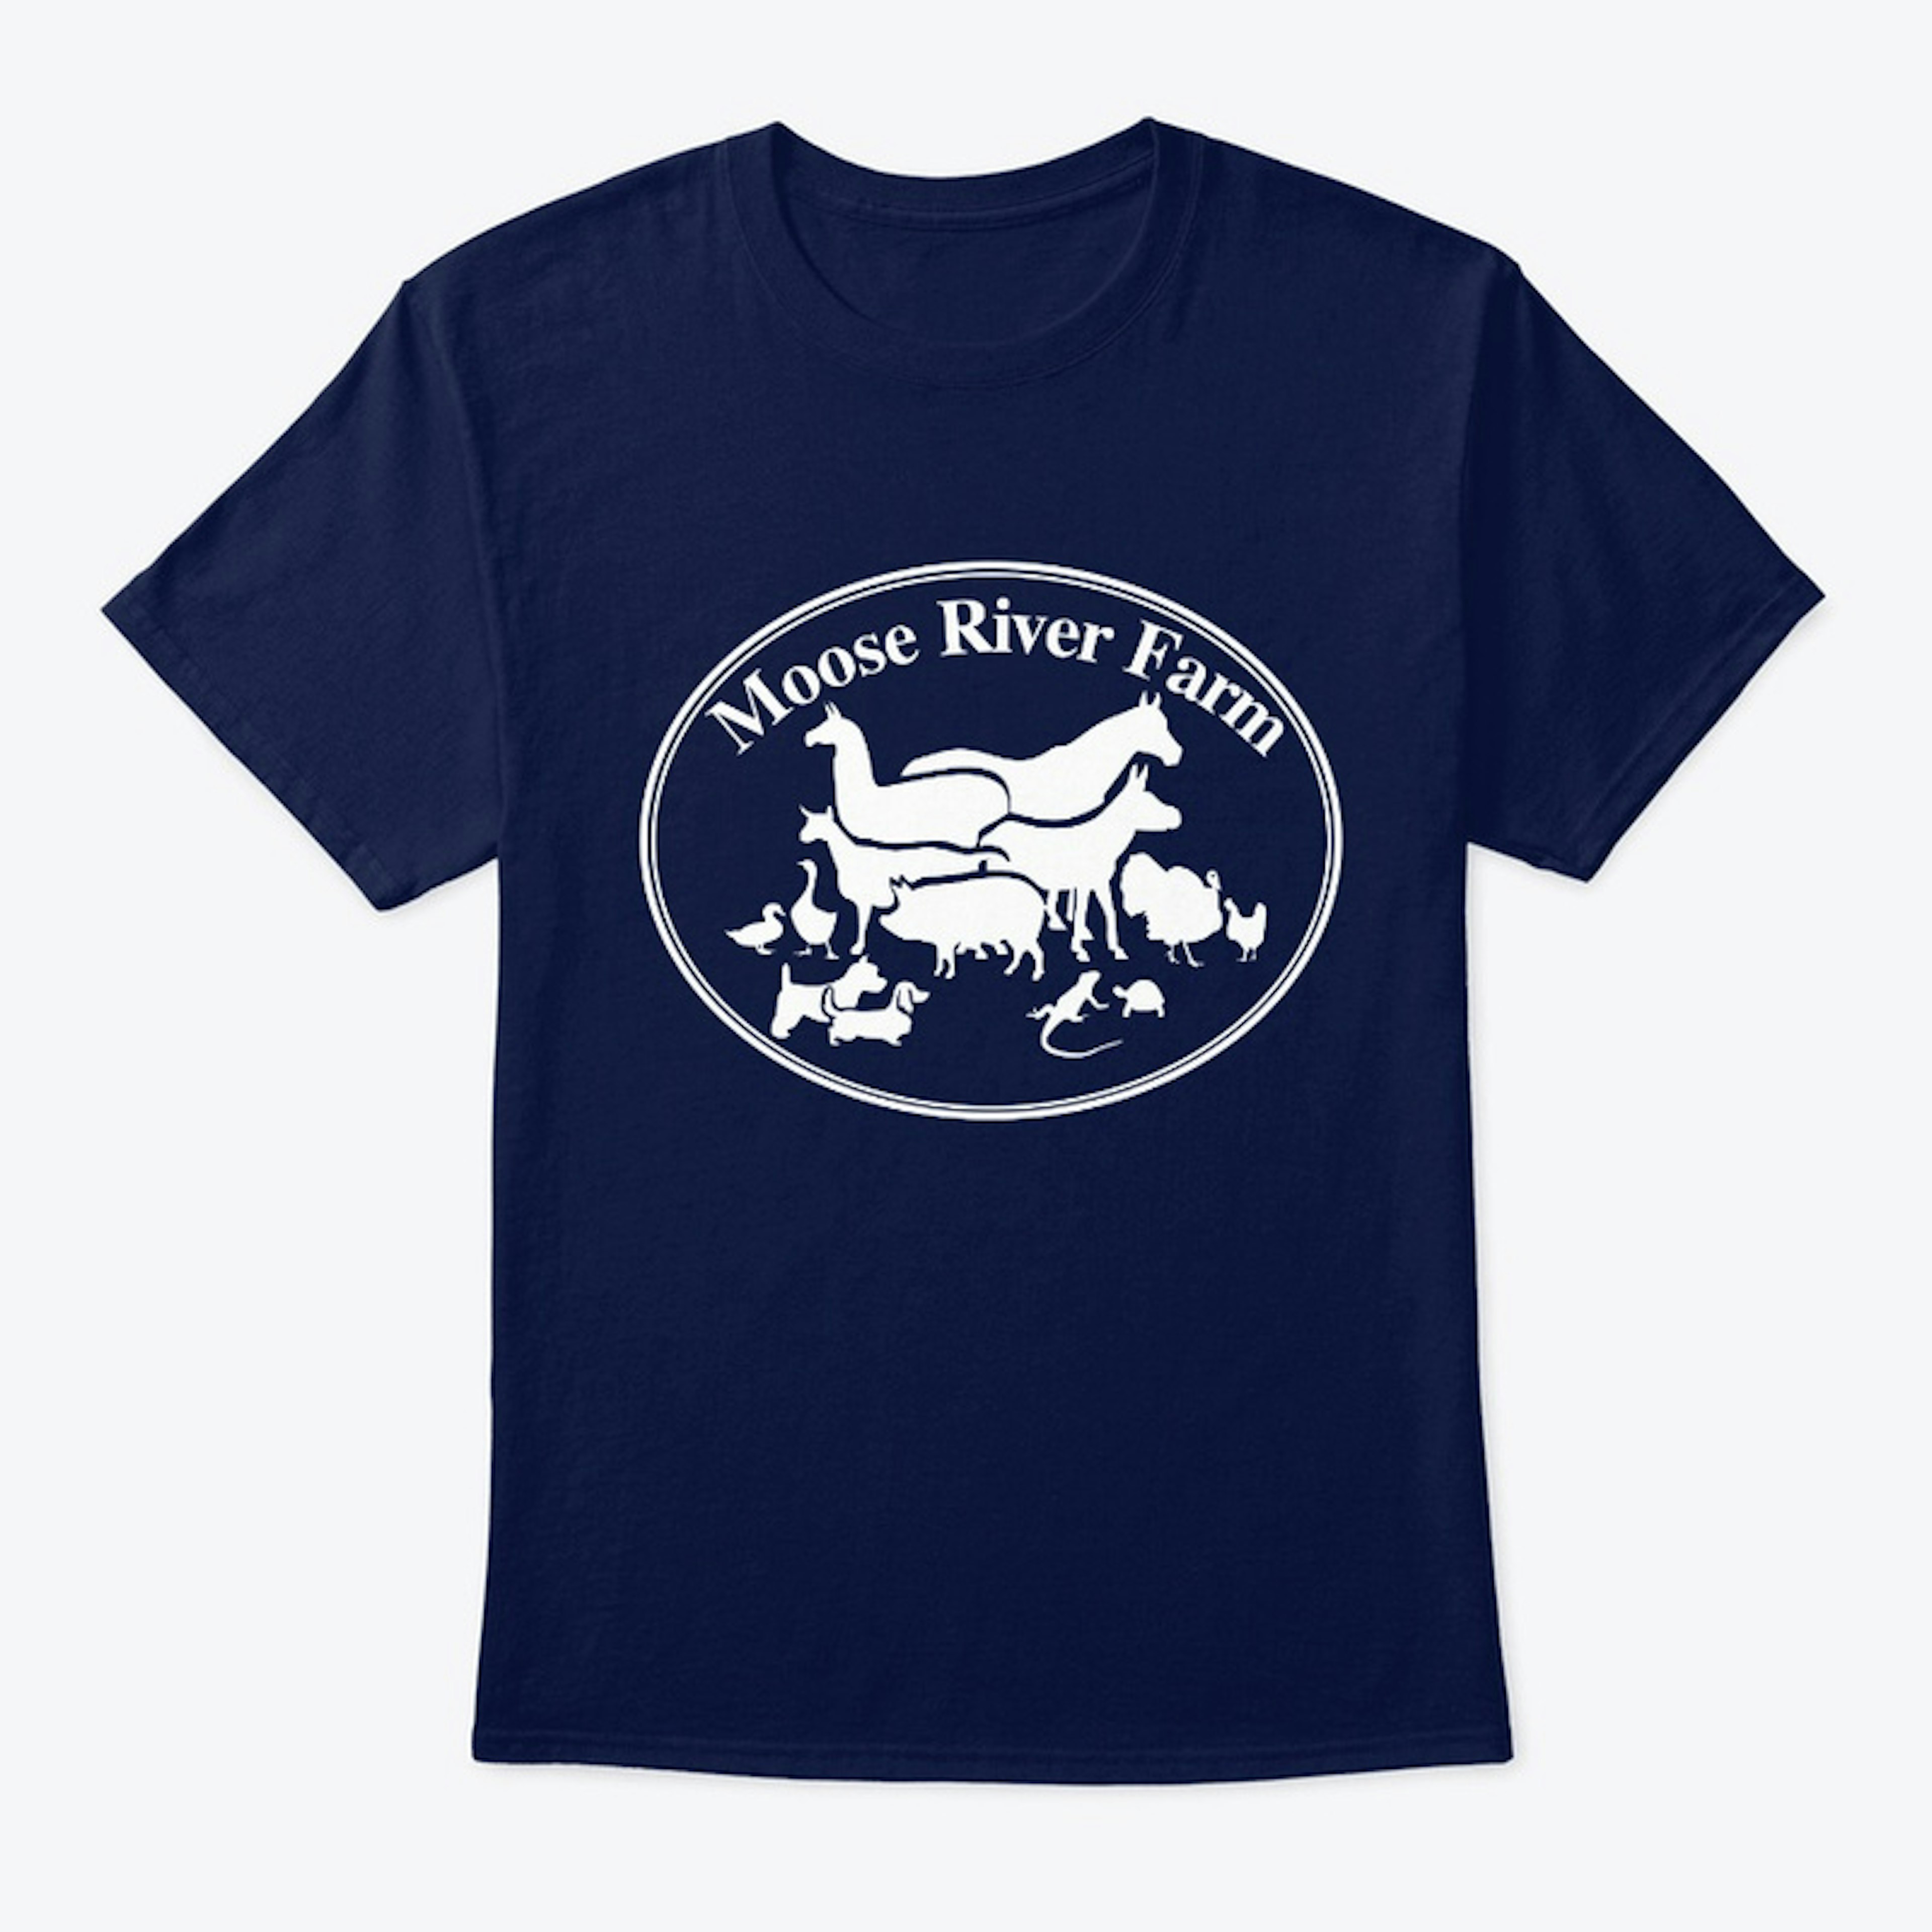 Moose River Farm UPDATED LOGO apparel